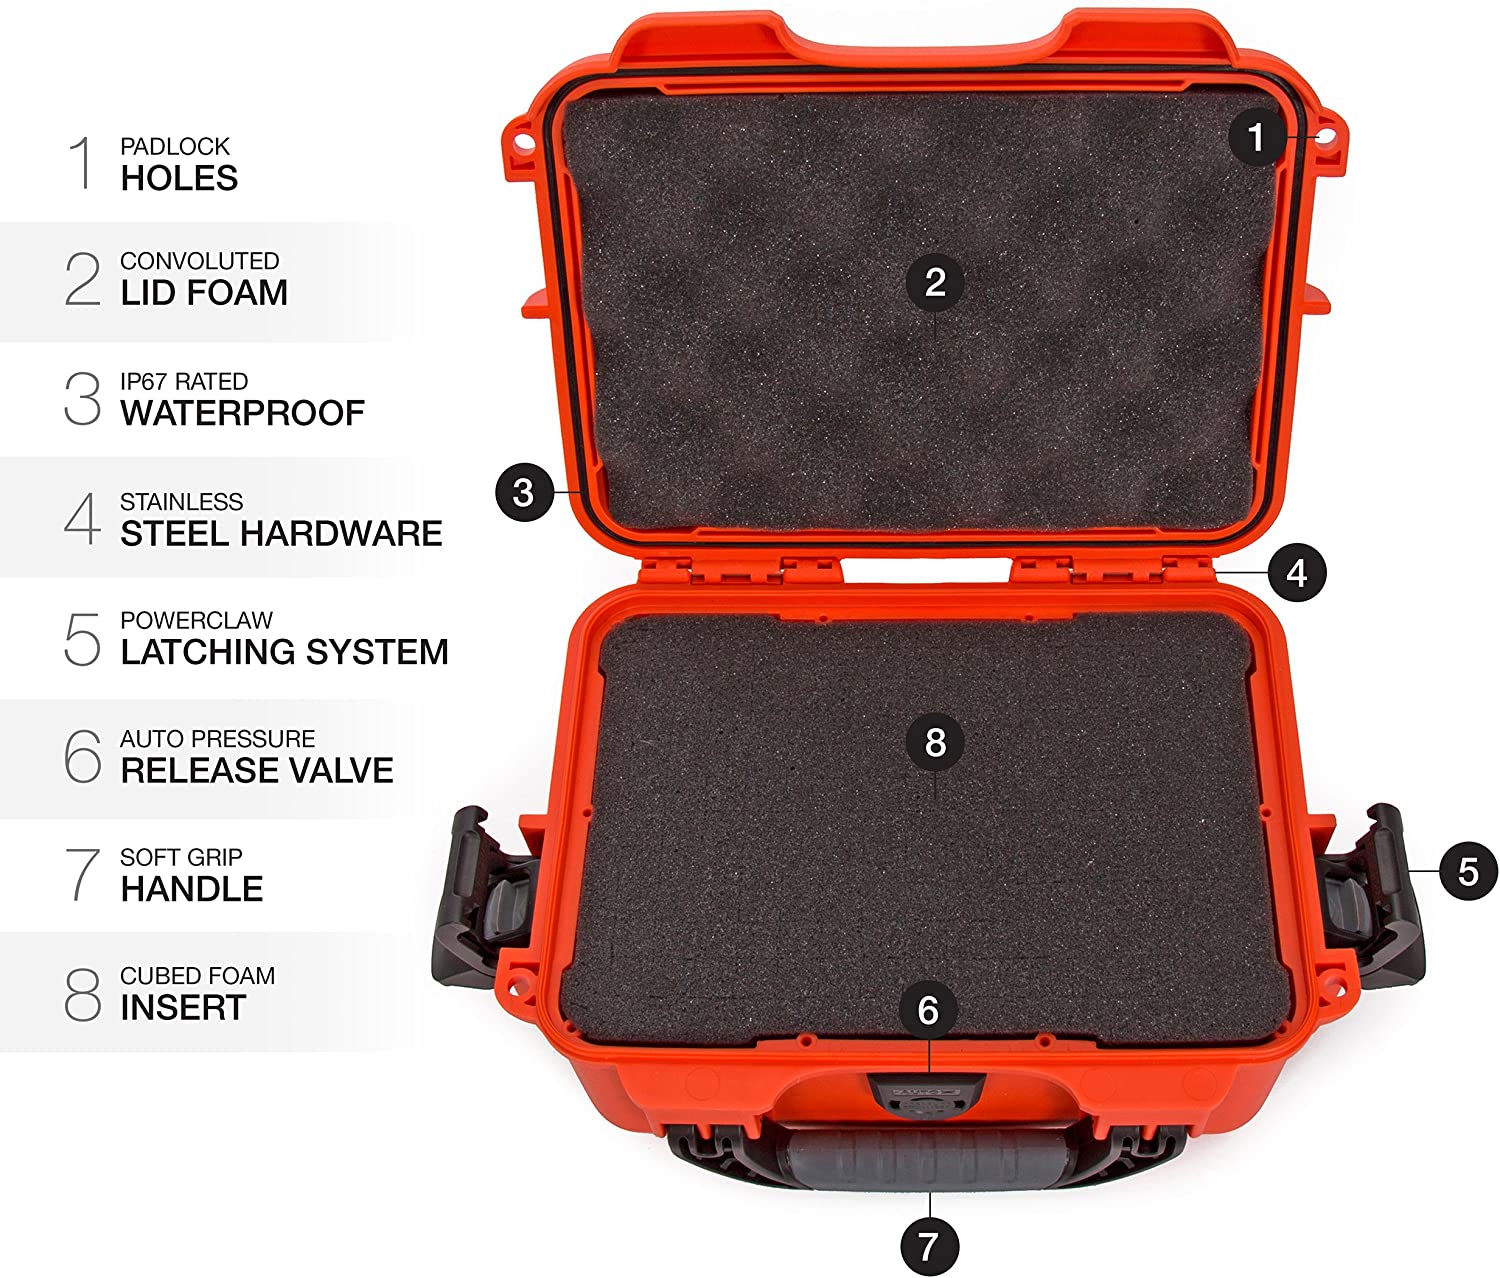 Nanuk 904 Waterproof Hard Case with Foam Insert - Orange - Made in Canada - KBM Outdoors